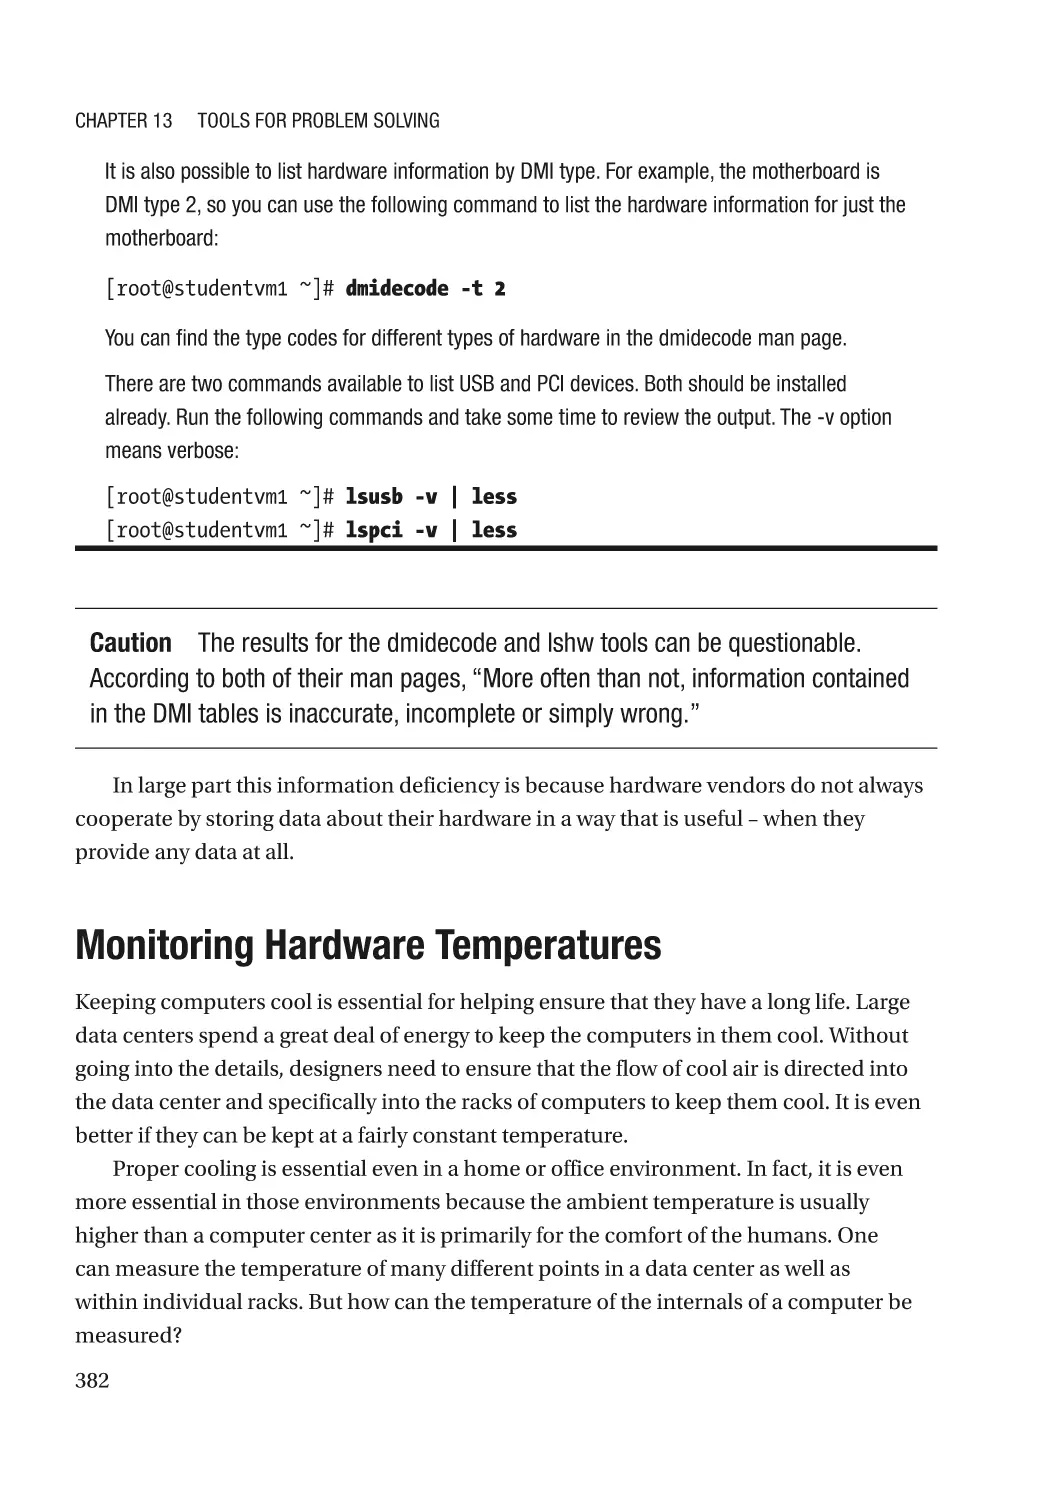 Monitoring Hardware Temperatures